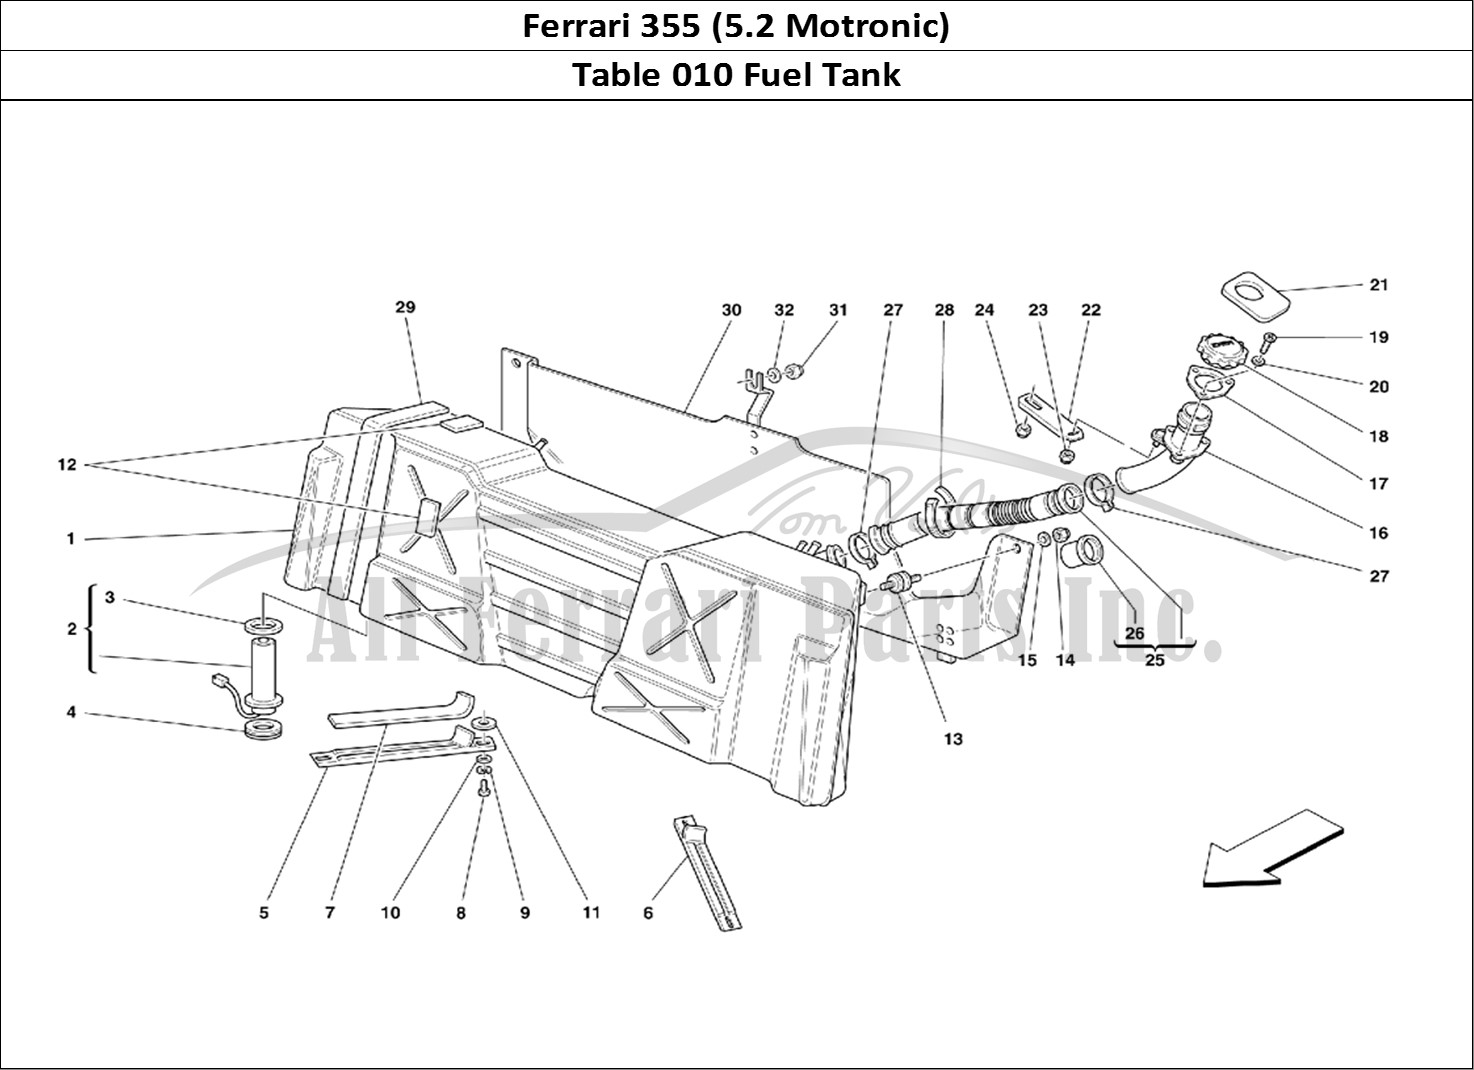 Ferrari Parts Ferrari 355 (5.2 Motronic) Page 010 Fuel Tank